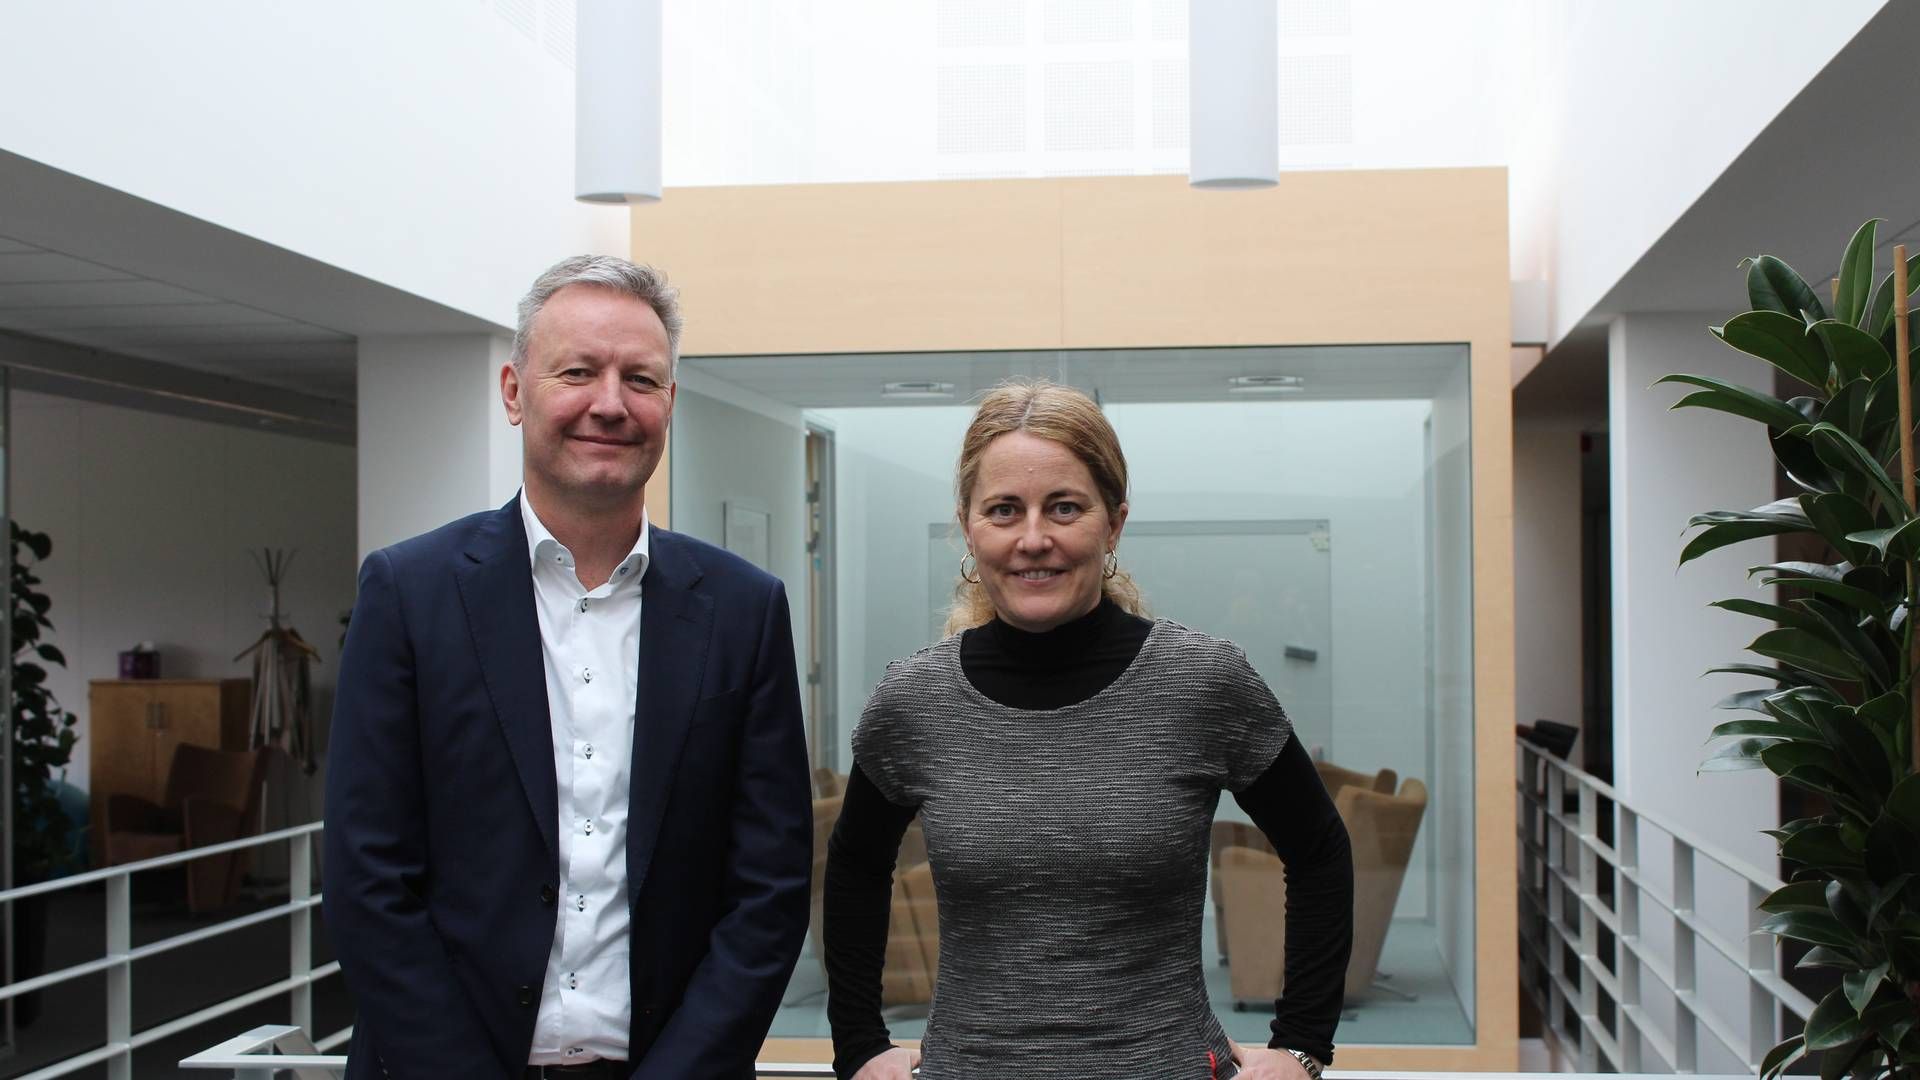 Sune Stampe Sørensen, Director General of the Danish Patent and Trademark Office, and Glenda Napier, CEO, Energy Cluster Denmark.